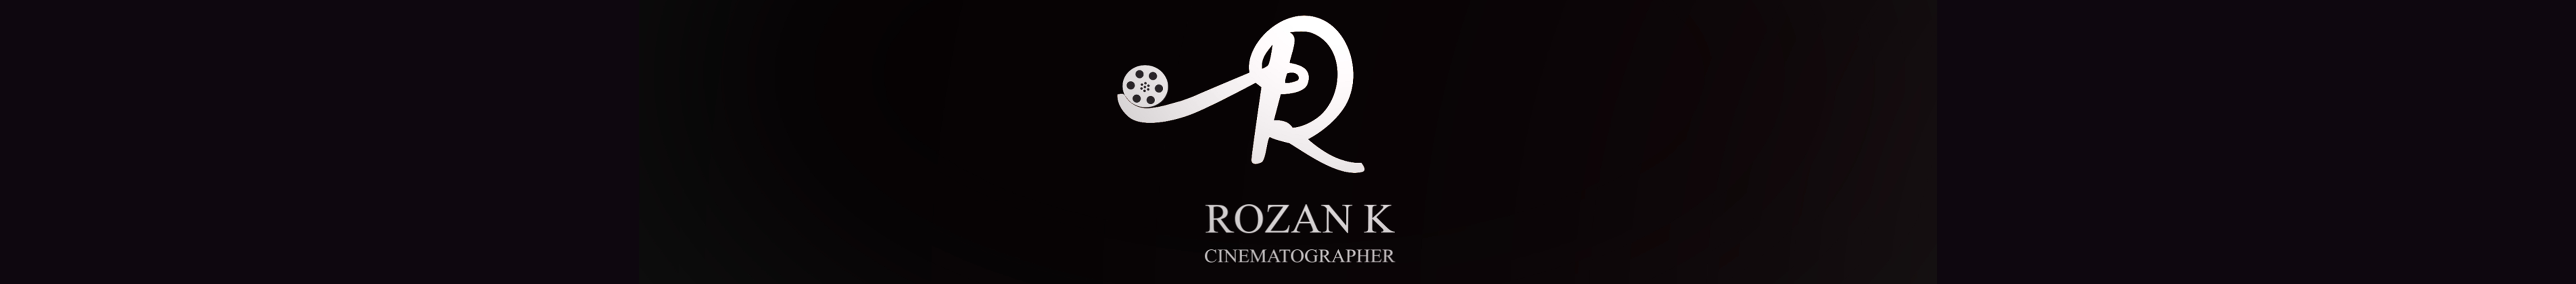 rozan k cinematographer's profile banner